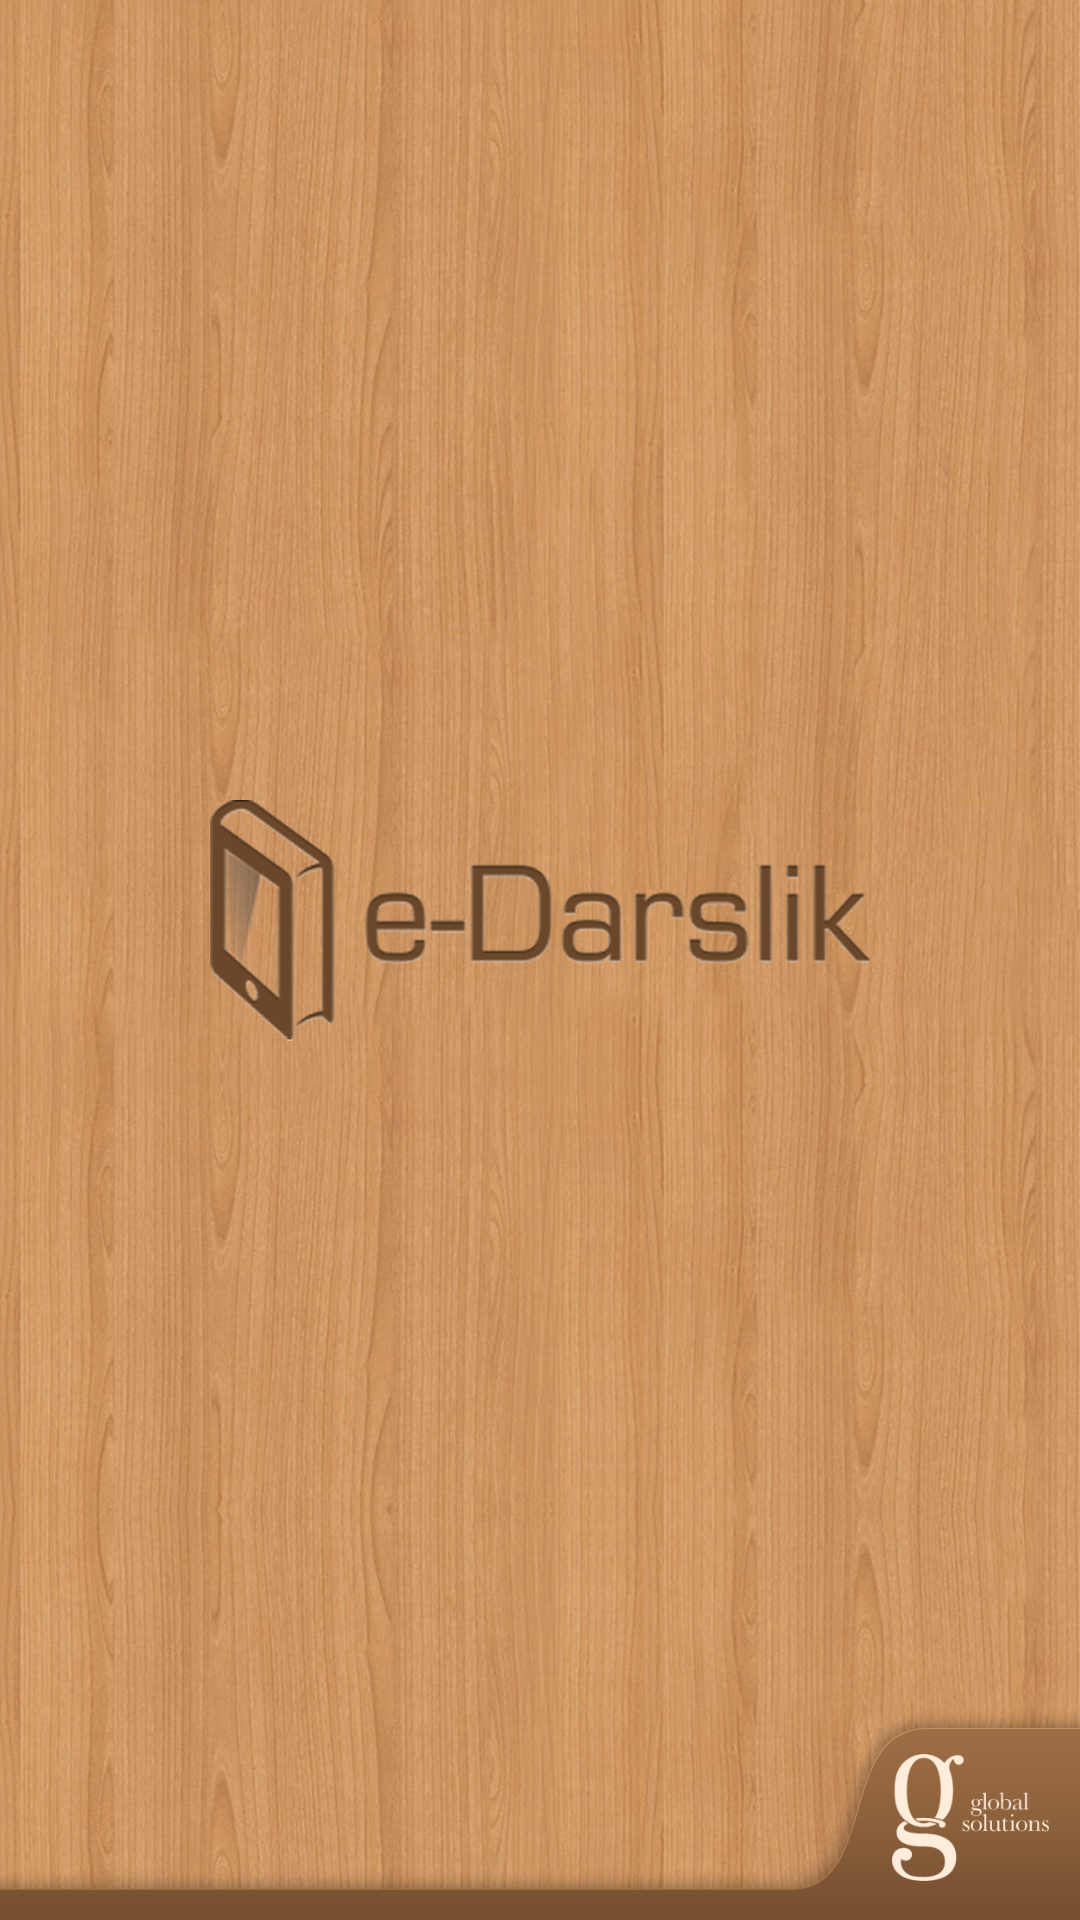 Android application E - darslik screenshort